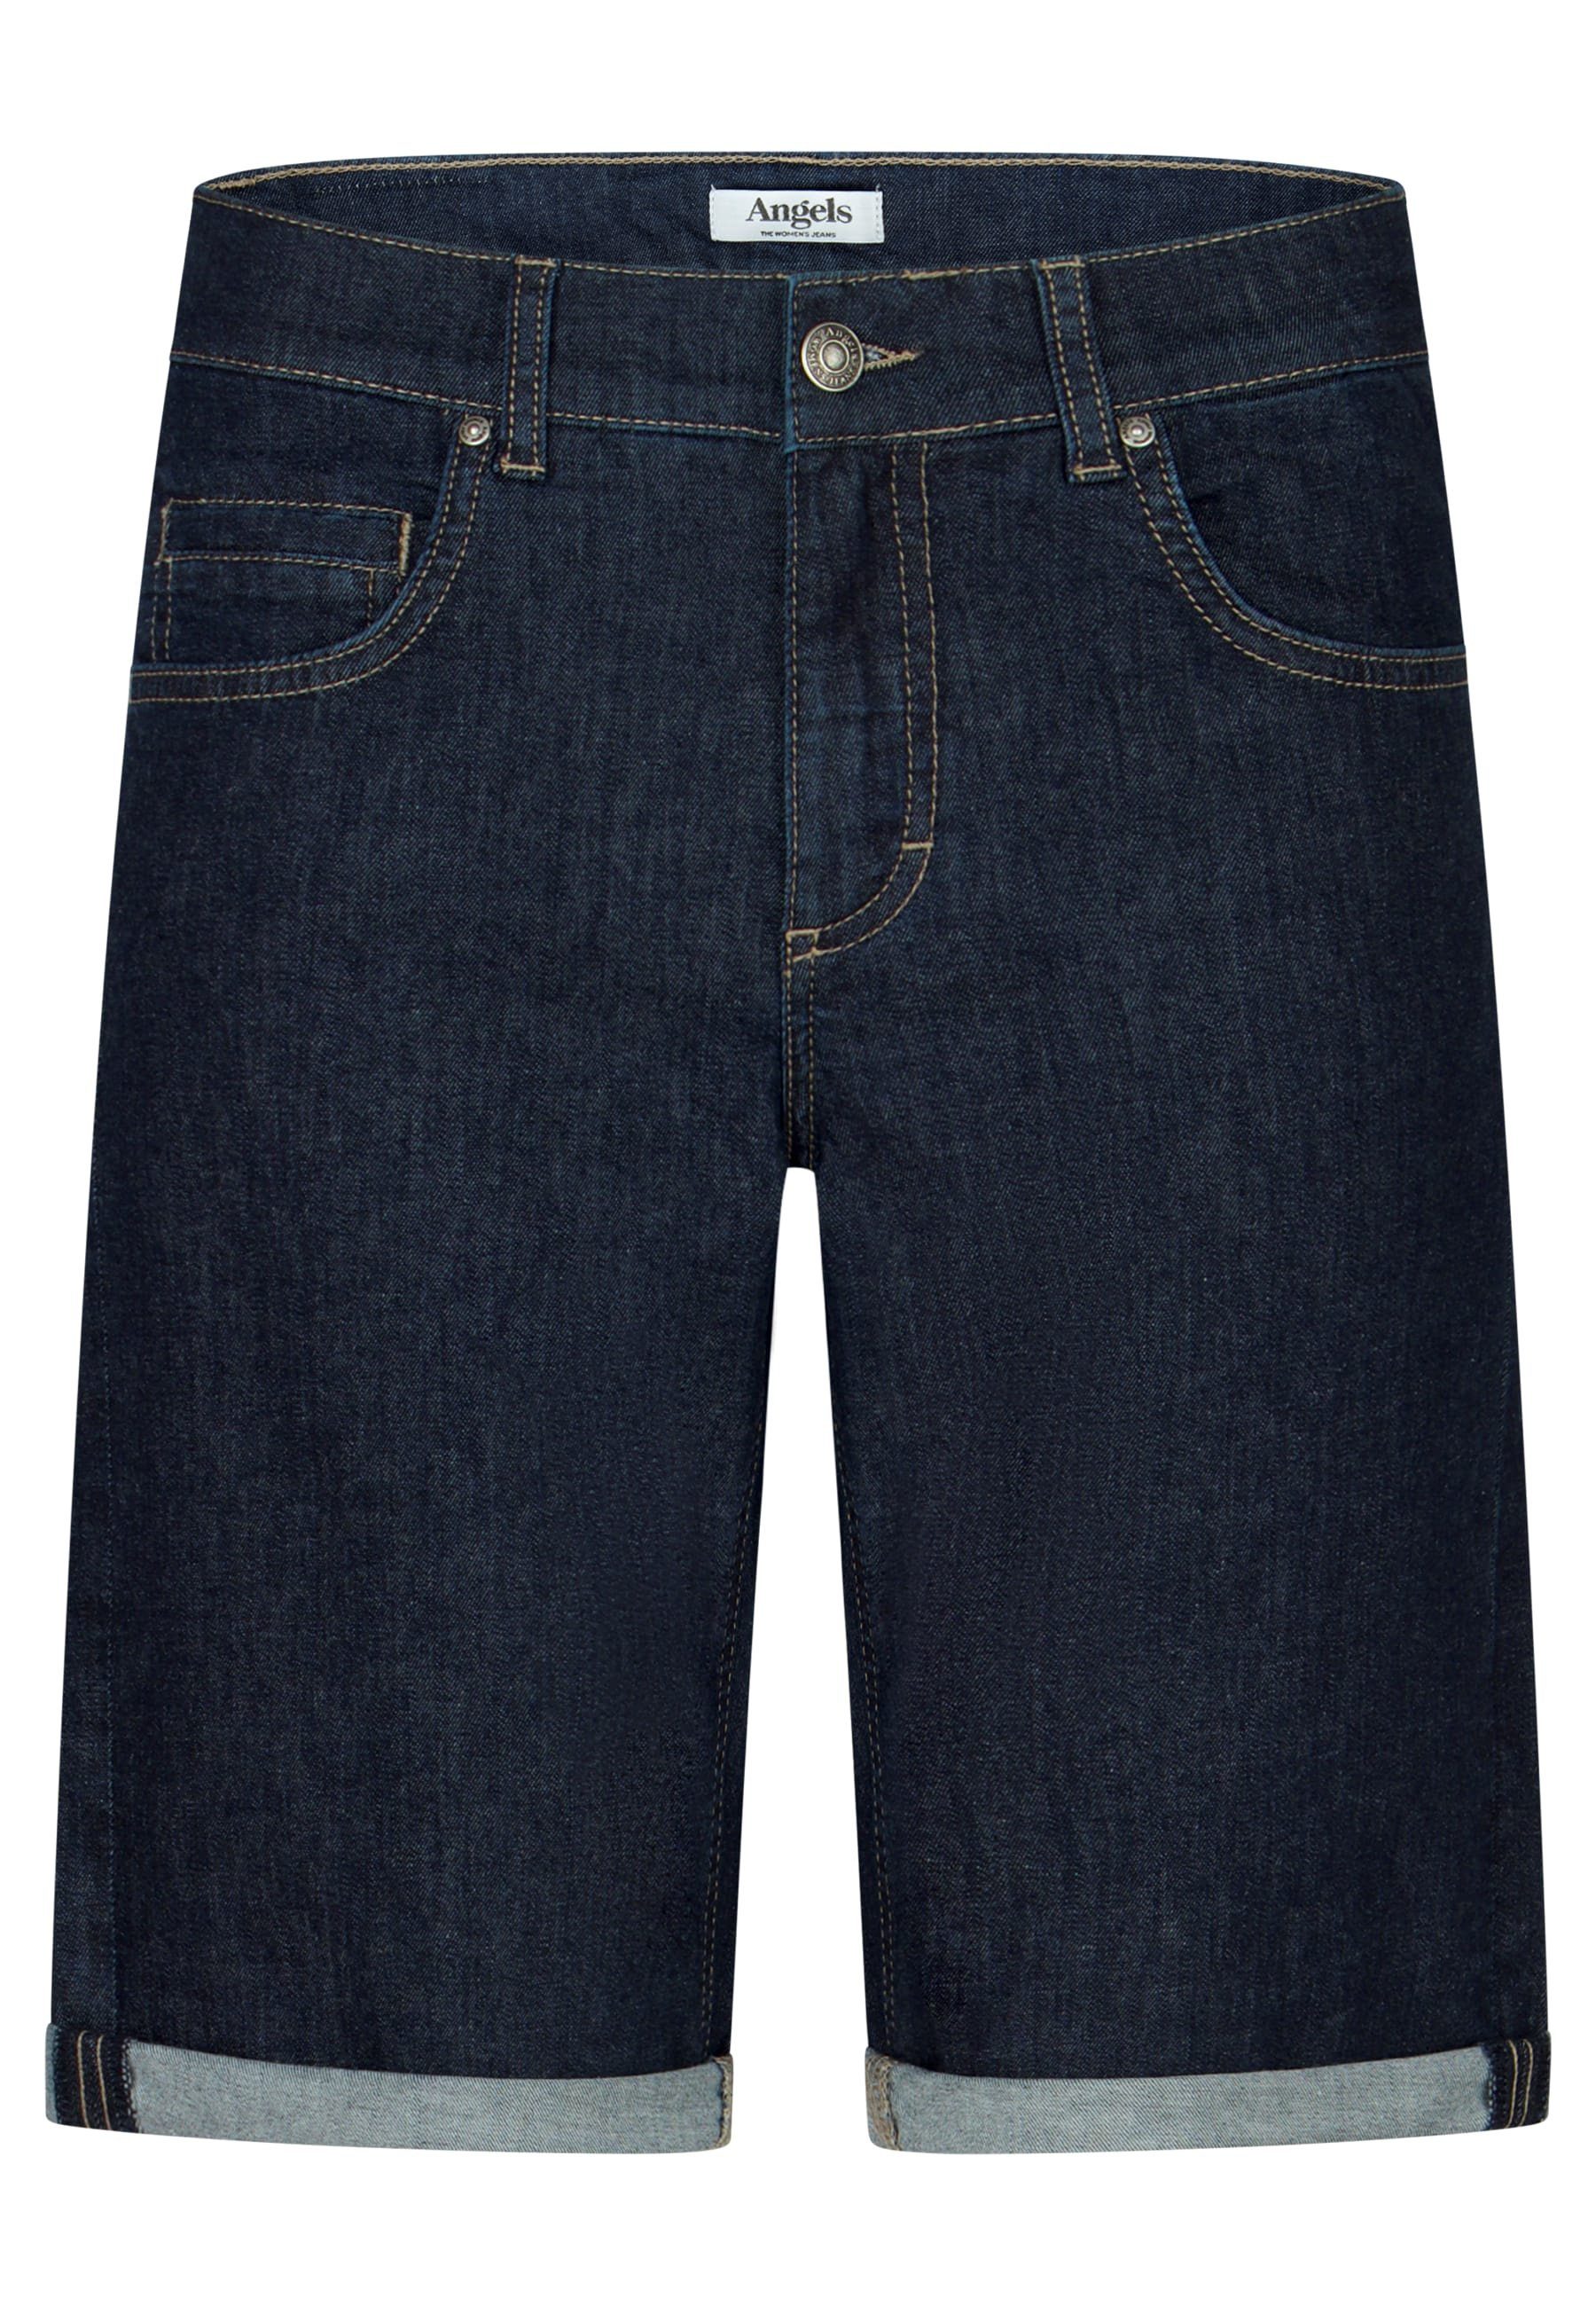 TU Jeanshotpants Preis-Leistungs-Verhältnis 5-Pocket-Jeans Gutes ANGELS Label-Applikationen, Bermuda mit